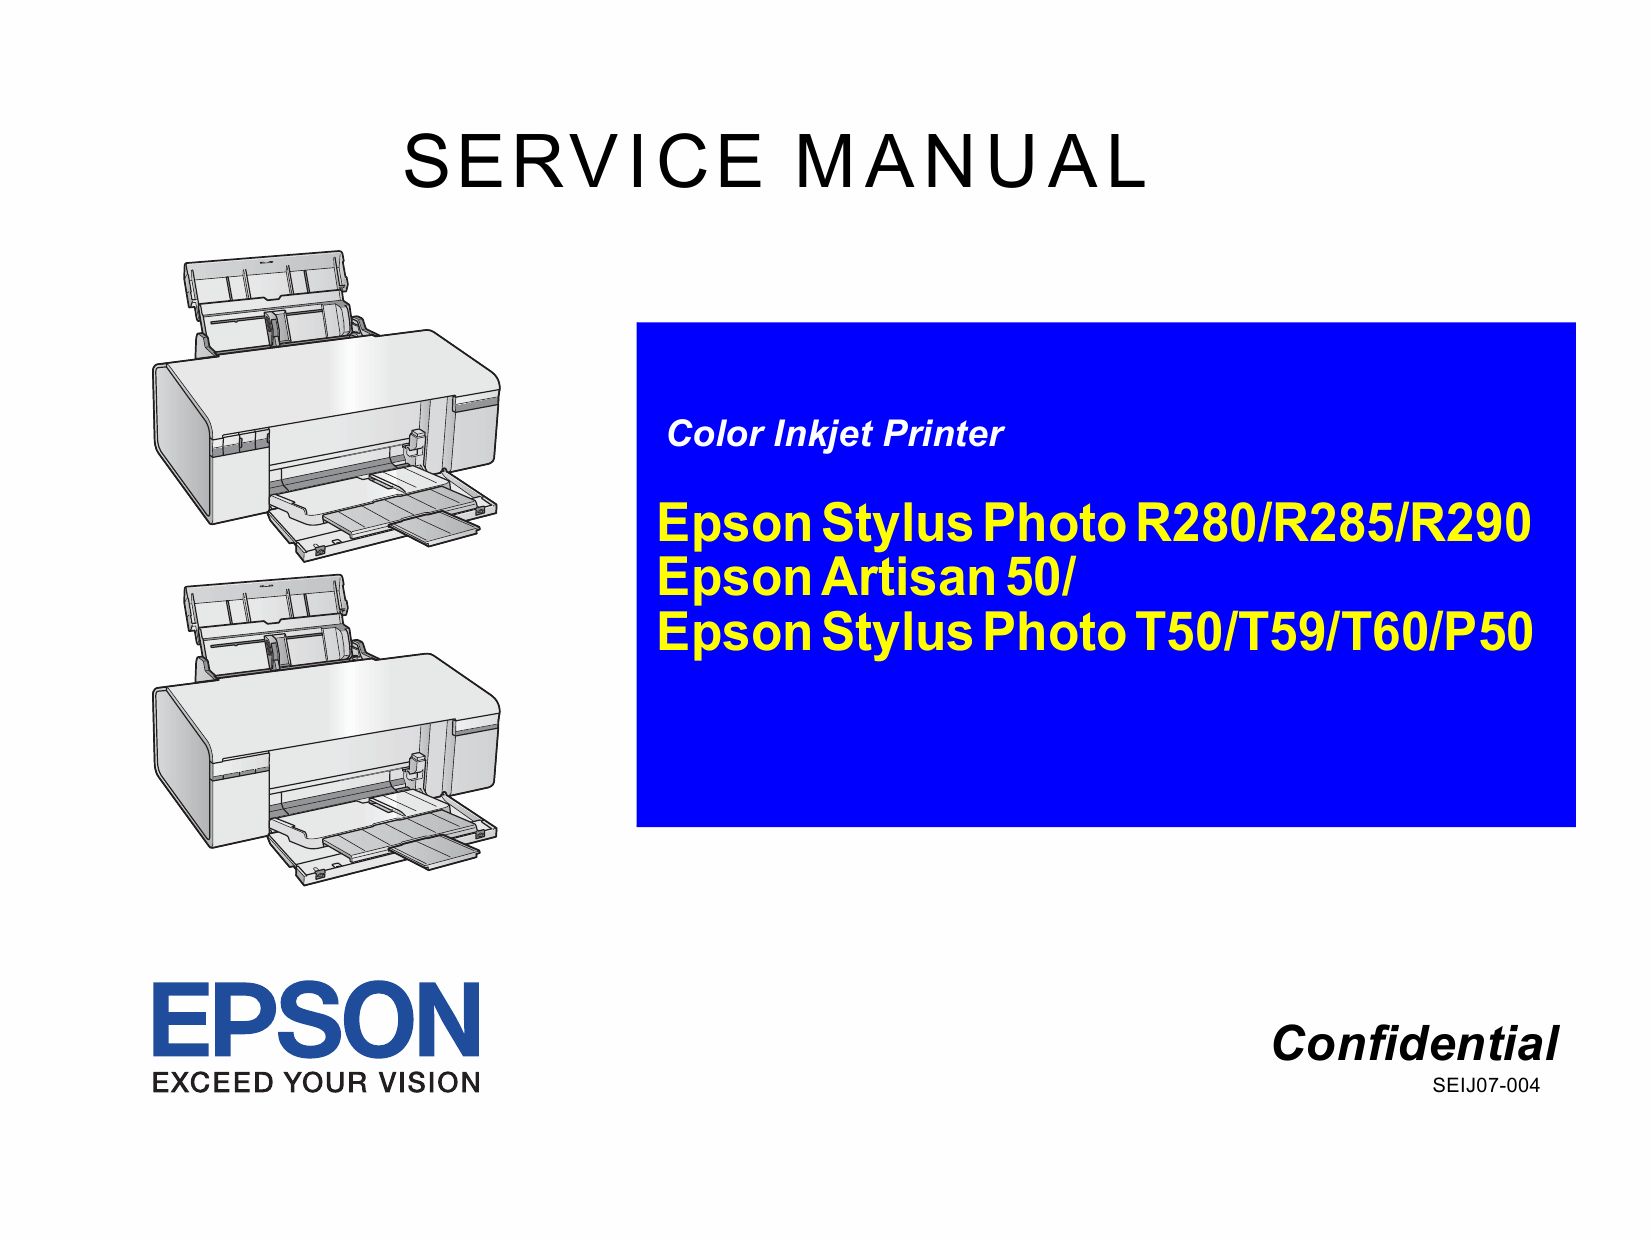 EPSON StylusPhoto T50 T59 T60 P50 Service Manual-1